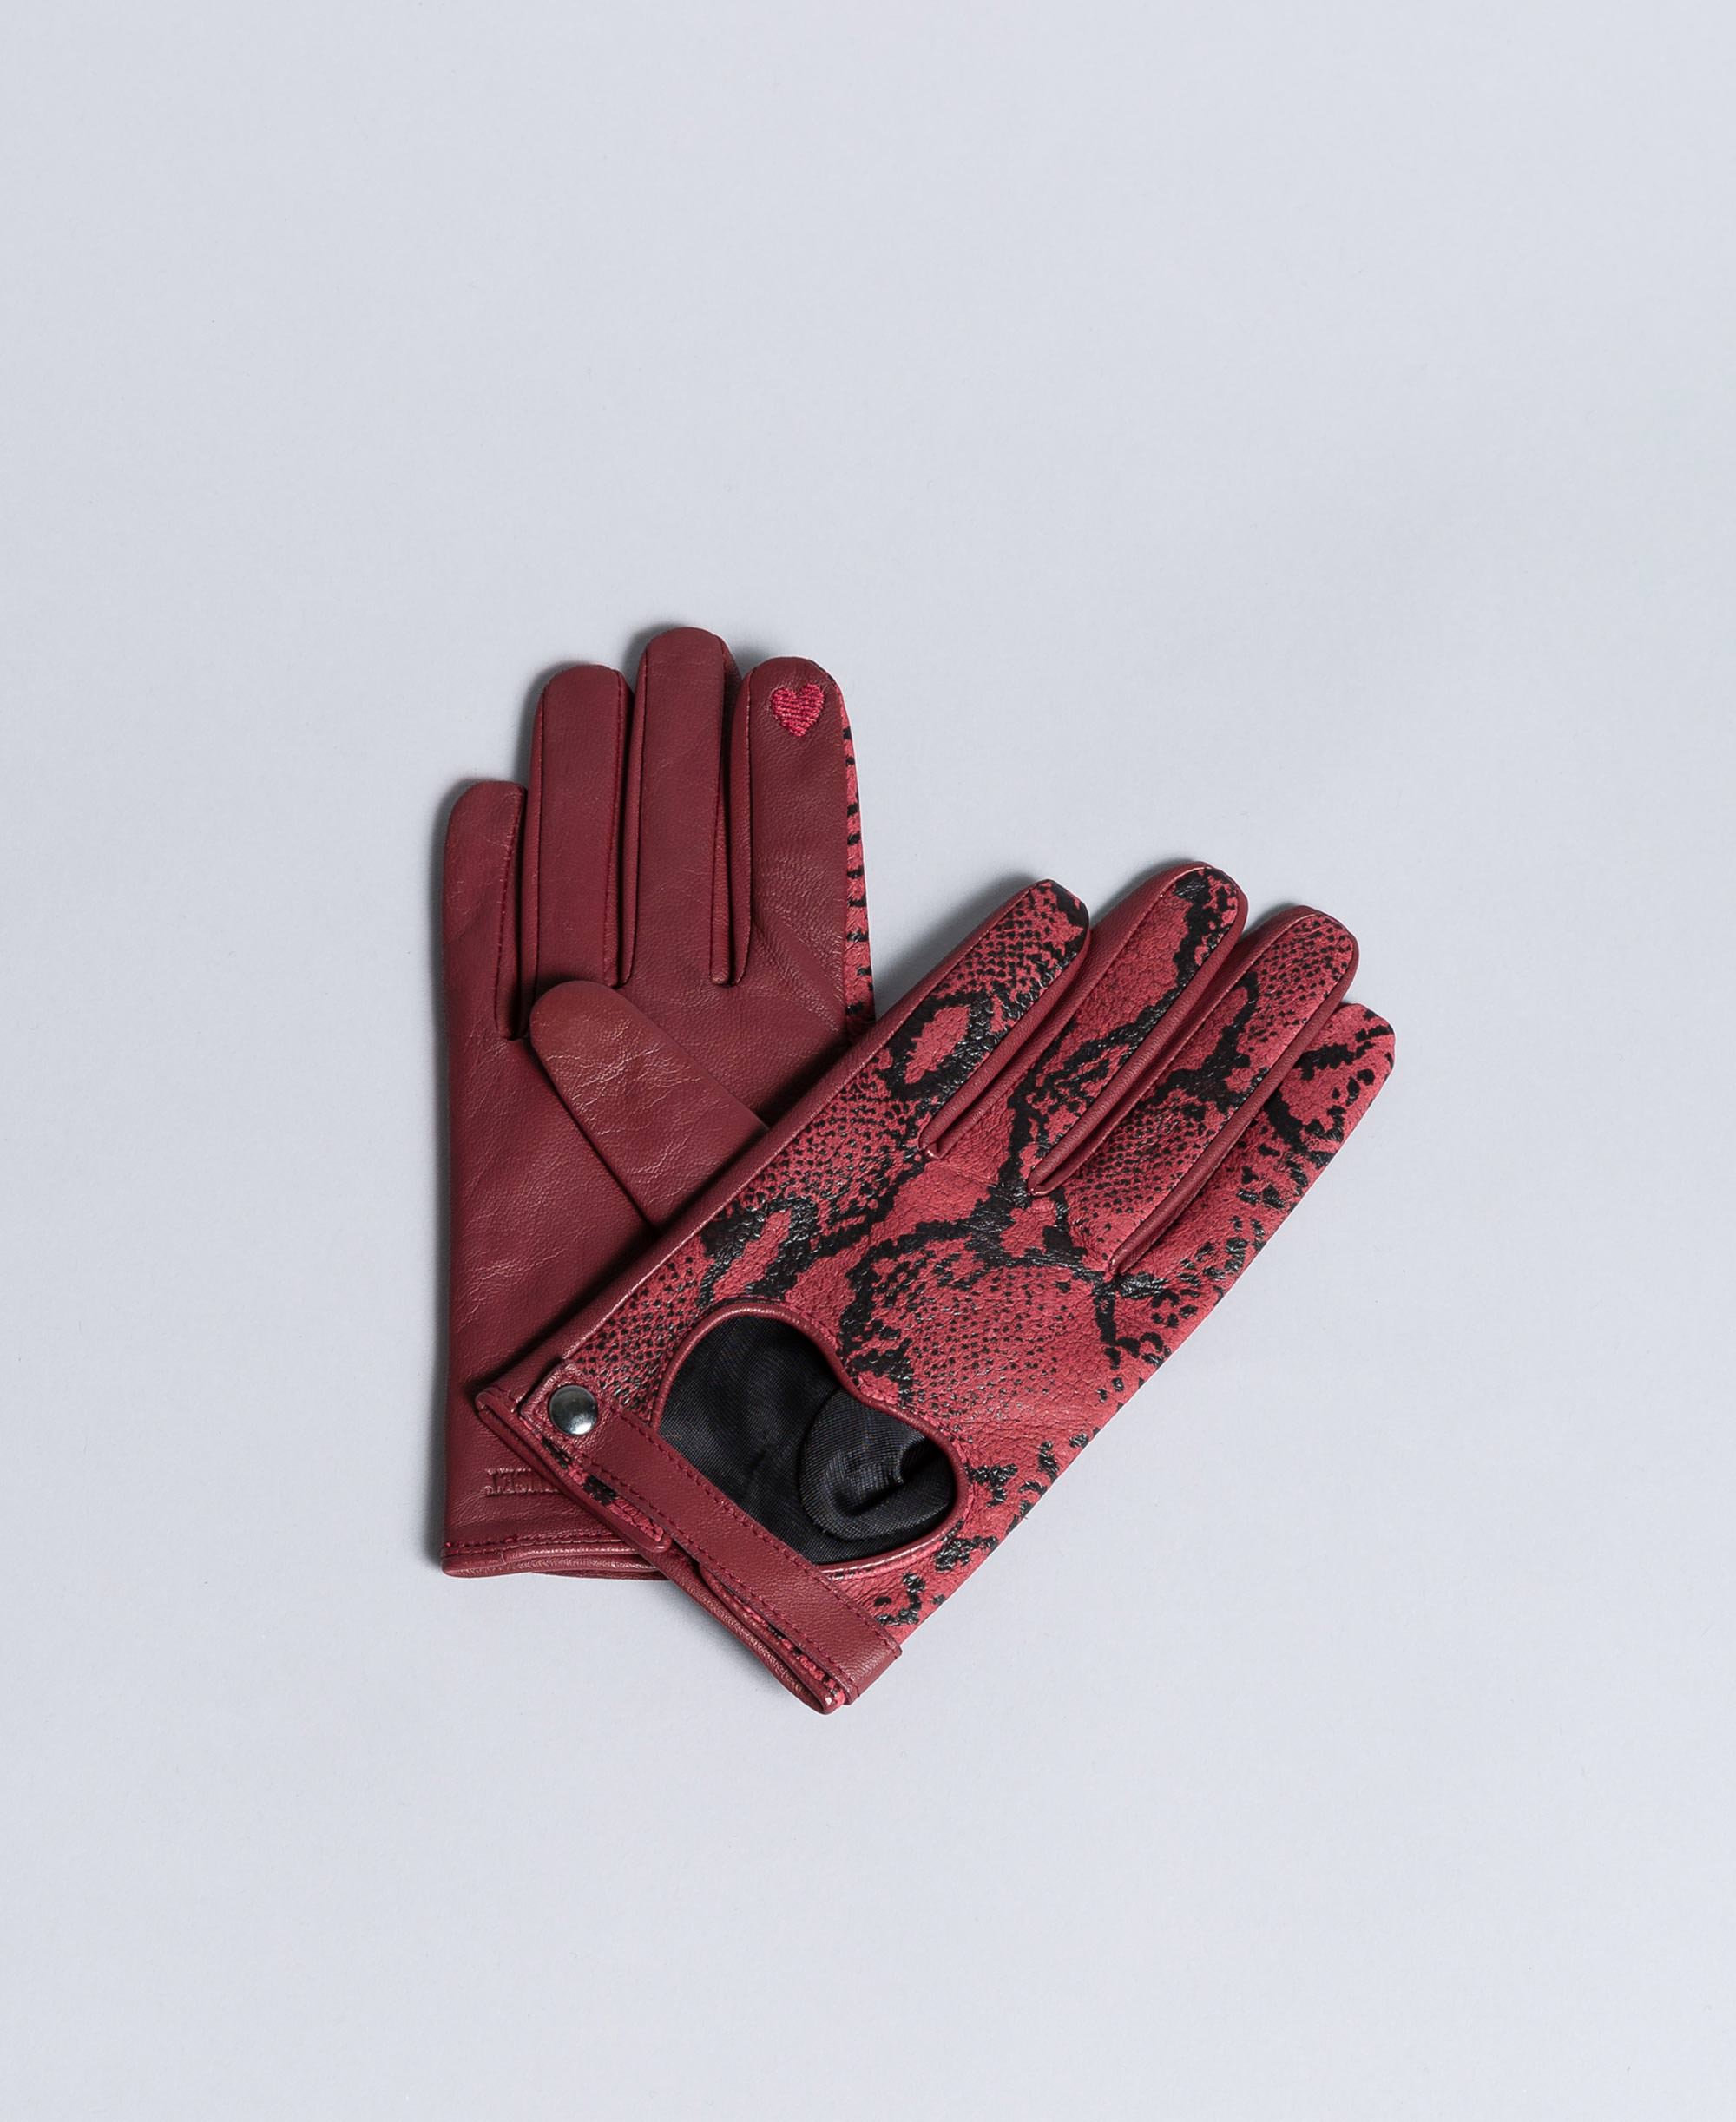 Animal print leather gloves